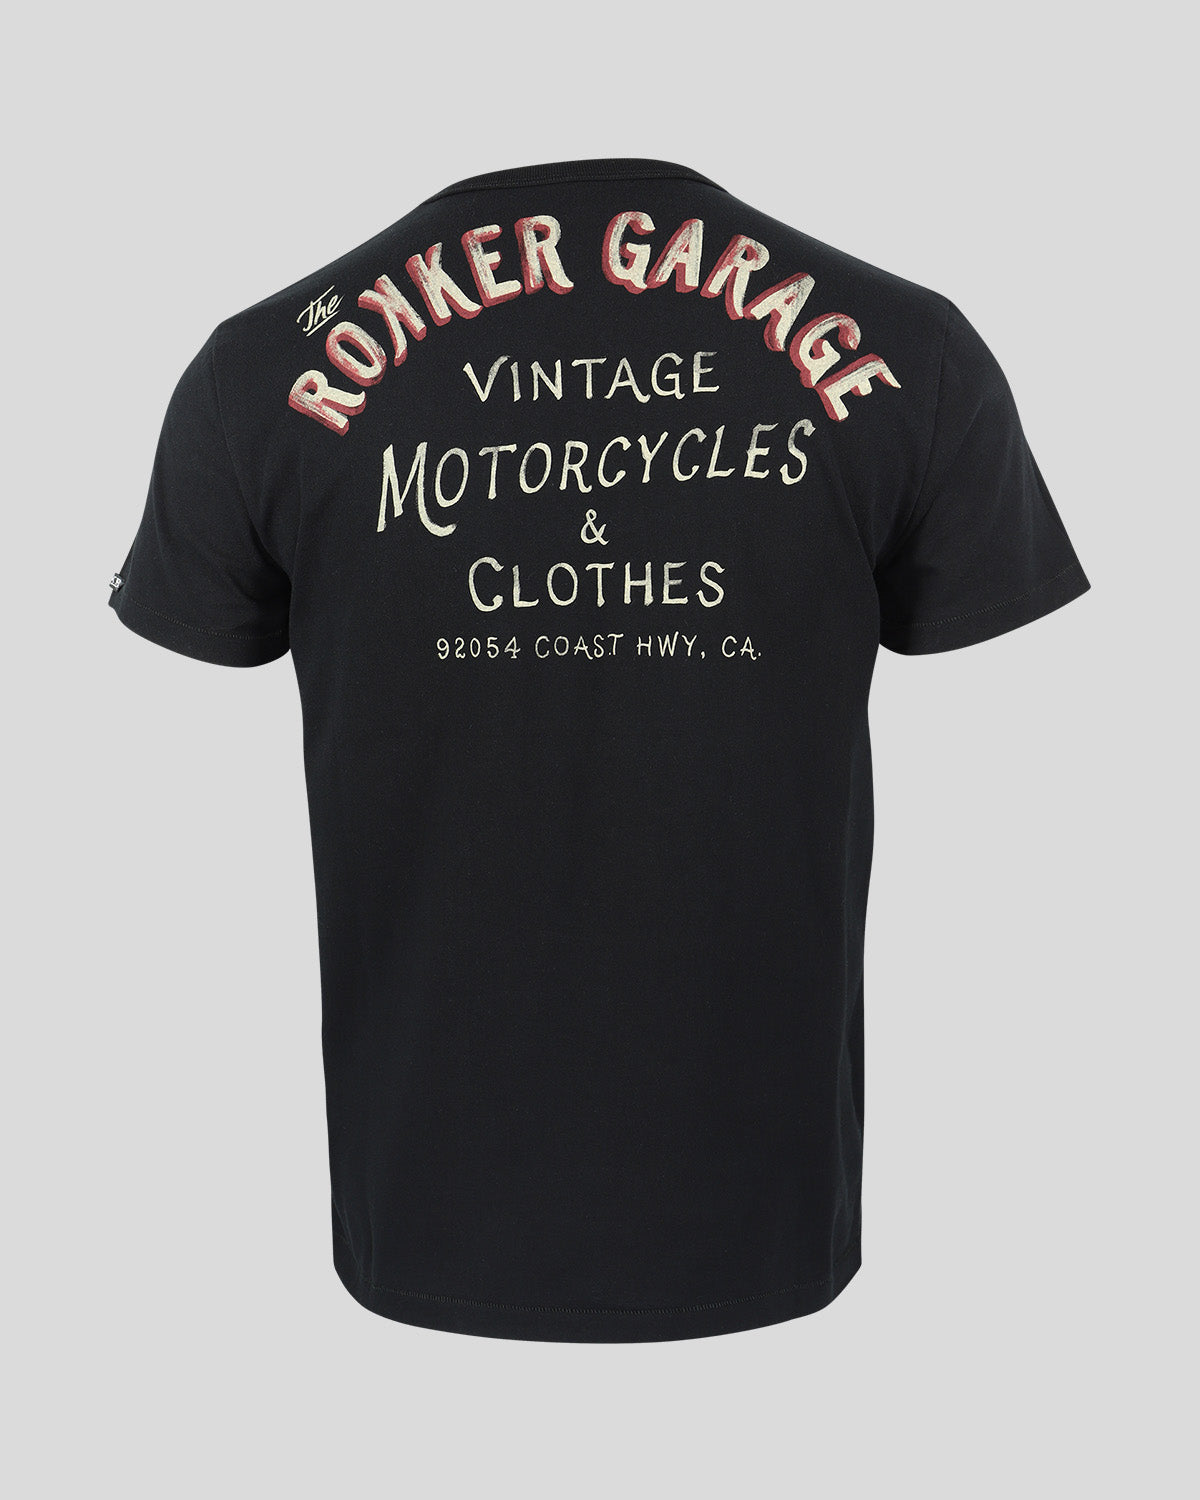 Rokker garage T-shirt Men